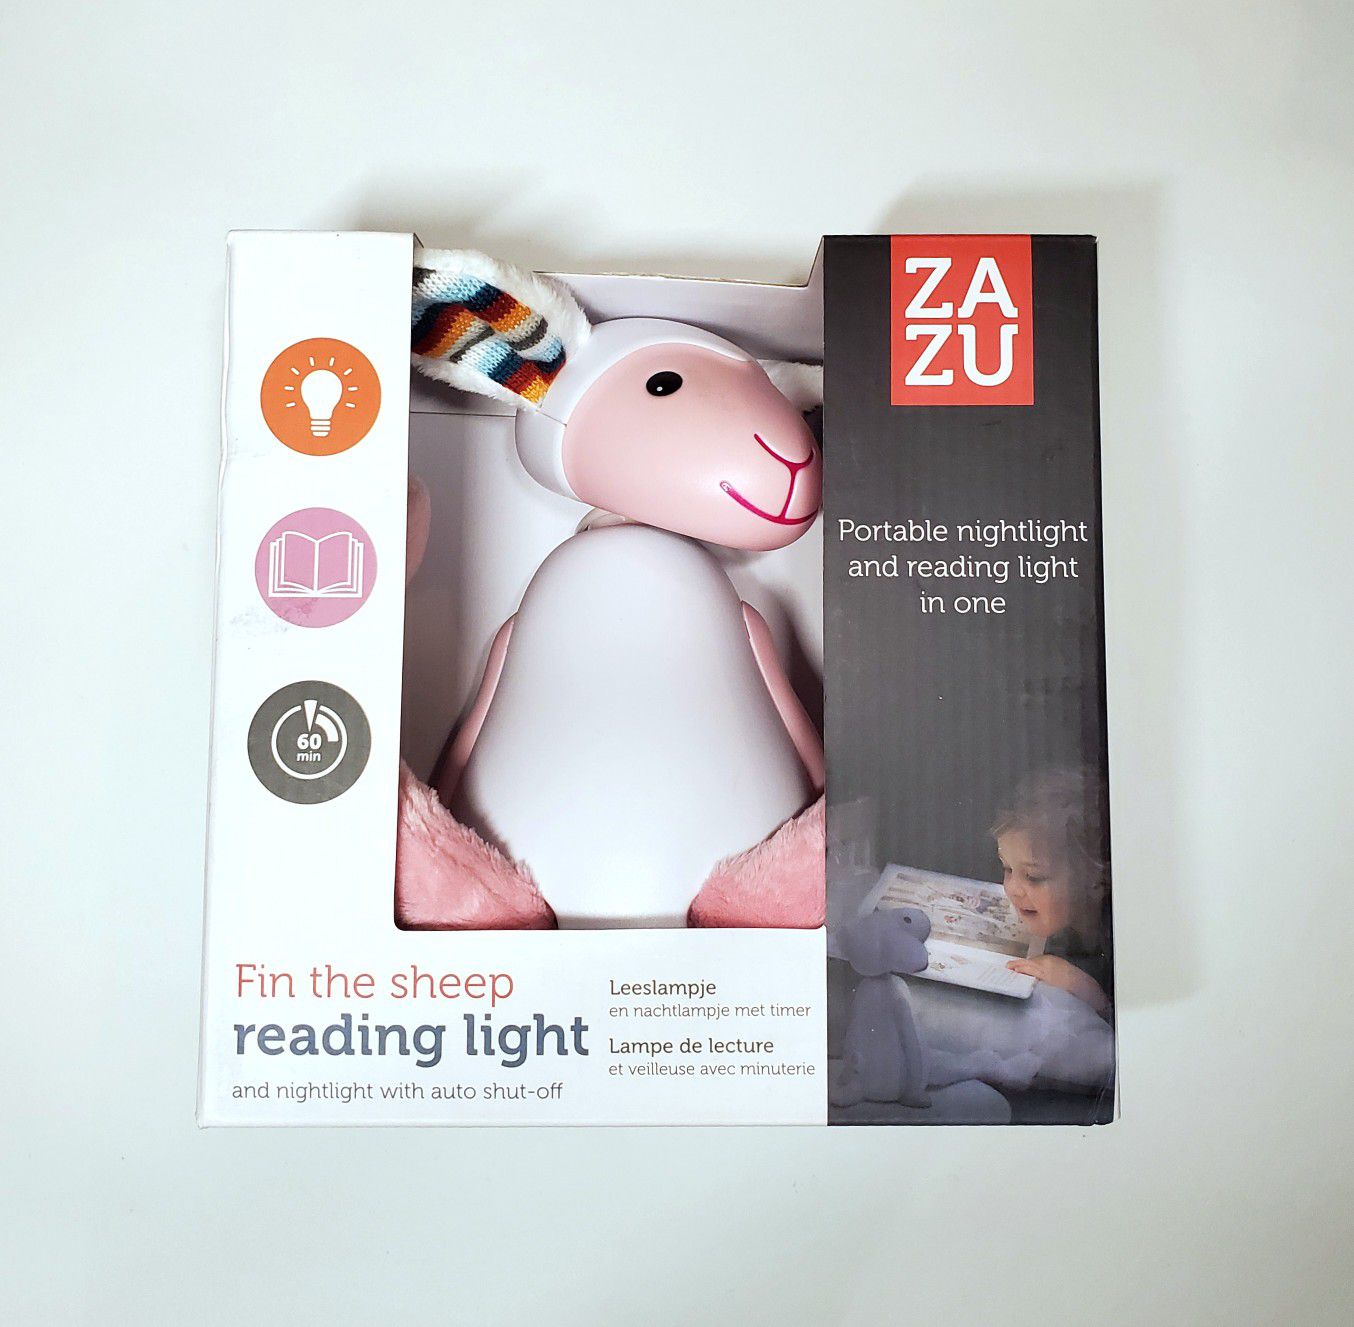 Kids Portable Reading Night Light Toy - Pink Bedside Reading Lamp, Auto Shut-Off, Adjustable Brightness, Cordless - Fin The Sheep by Zazu Kids